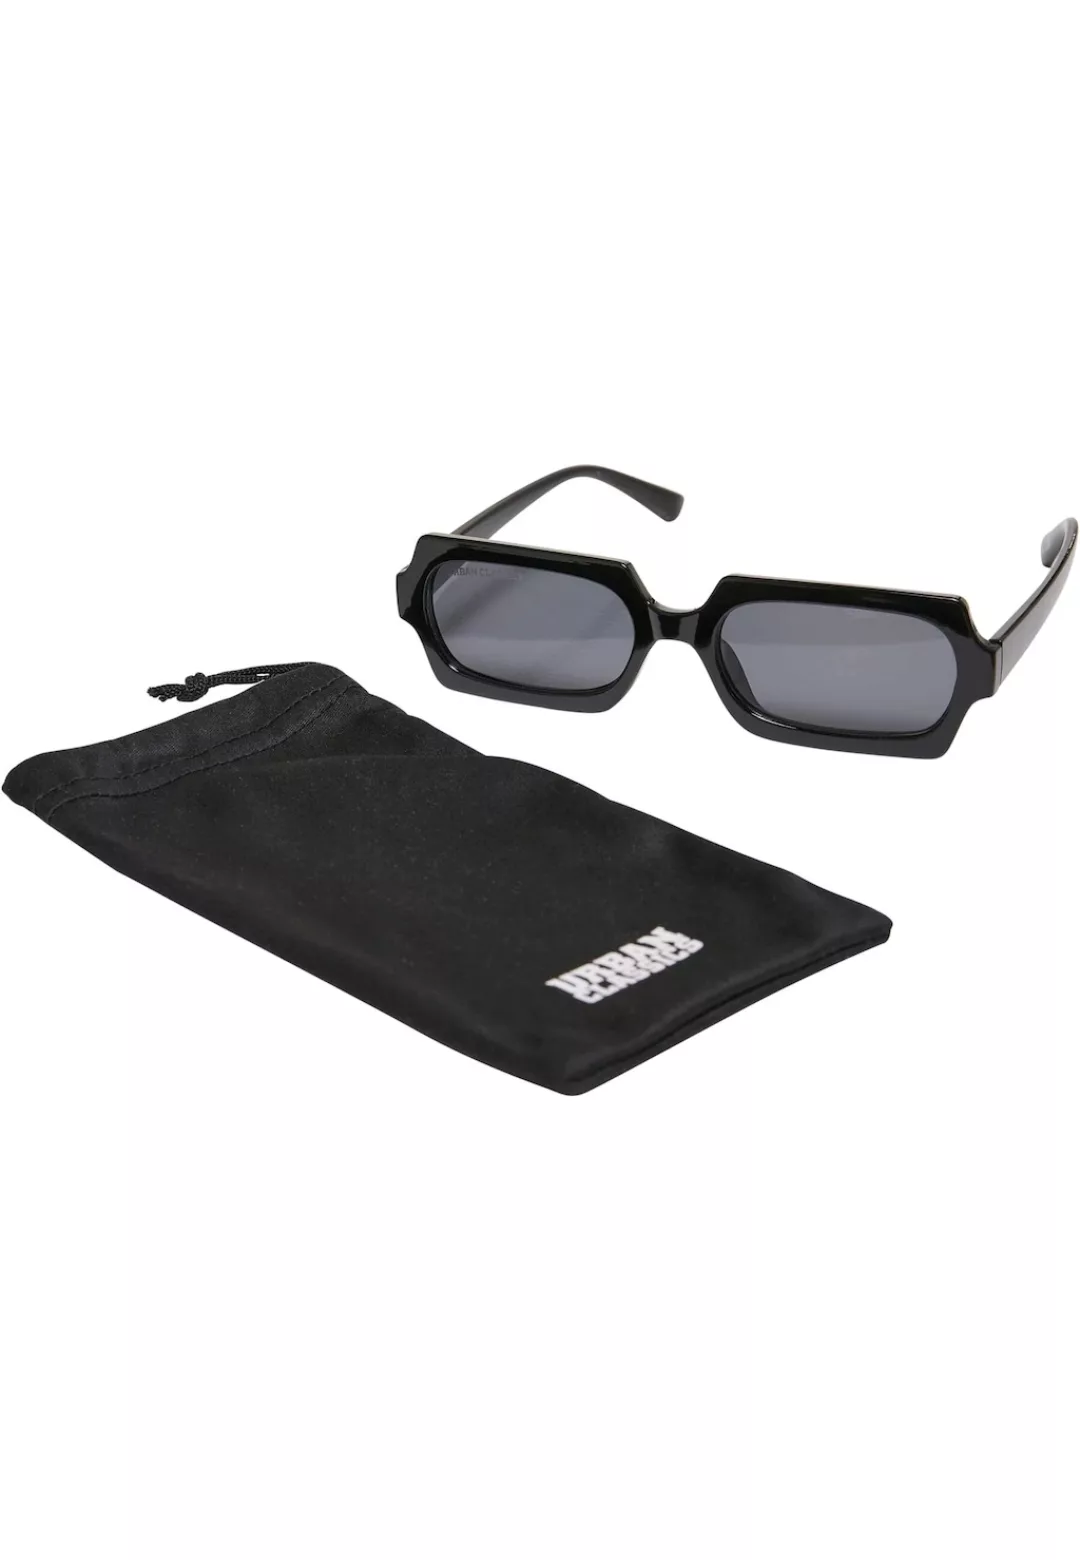 URBAN CLASSICS Sonnenbrille "Urban Classics Unisex Sunglasses Saint Louis" günstig online kaufen